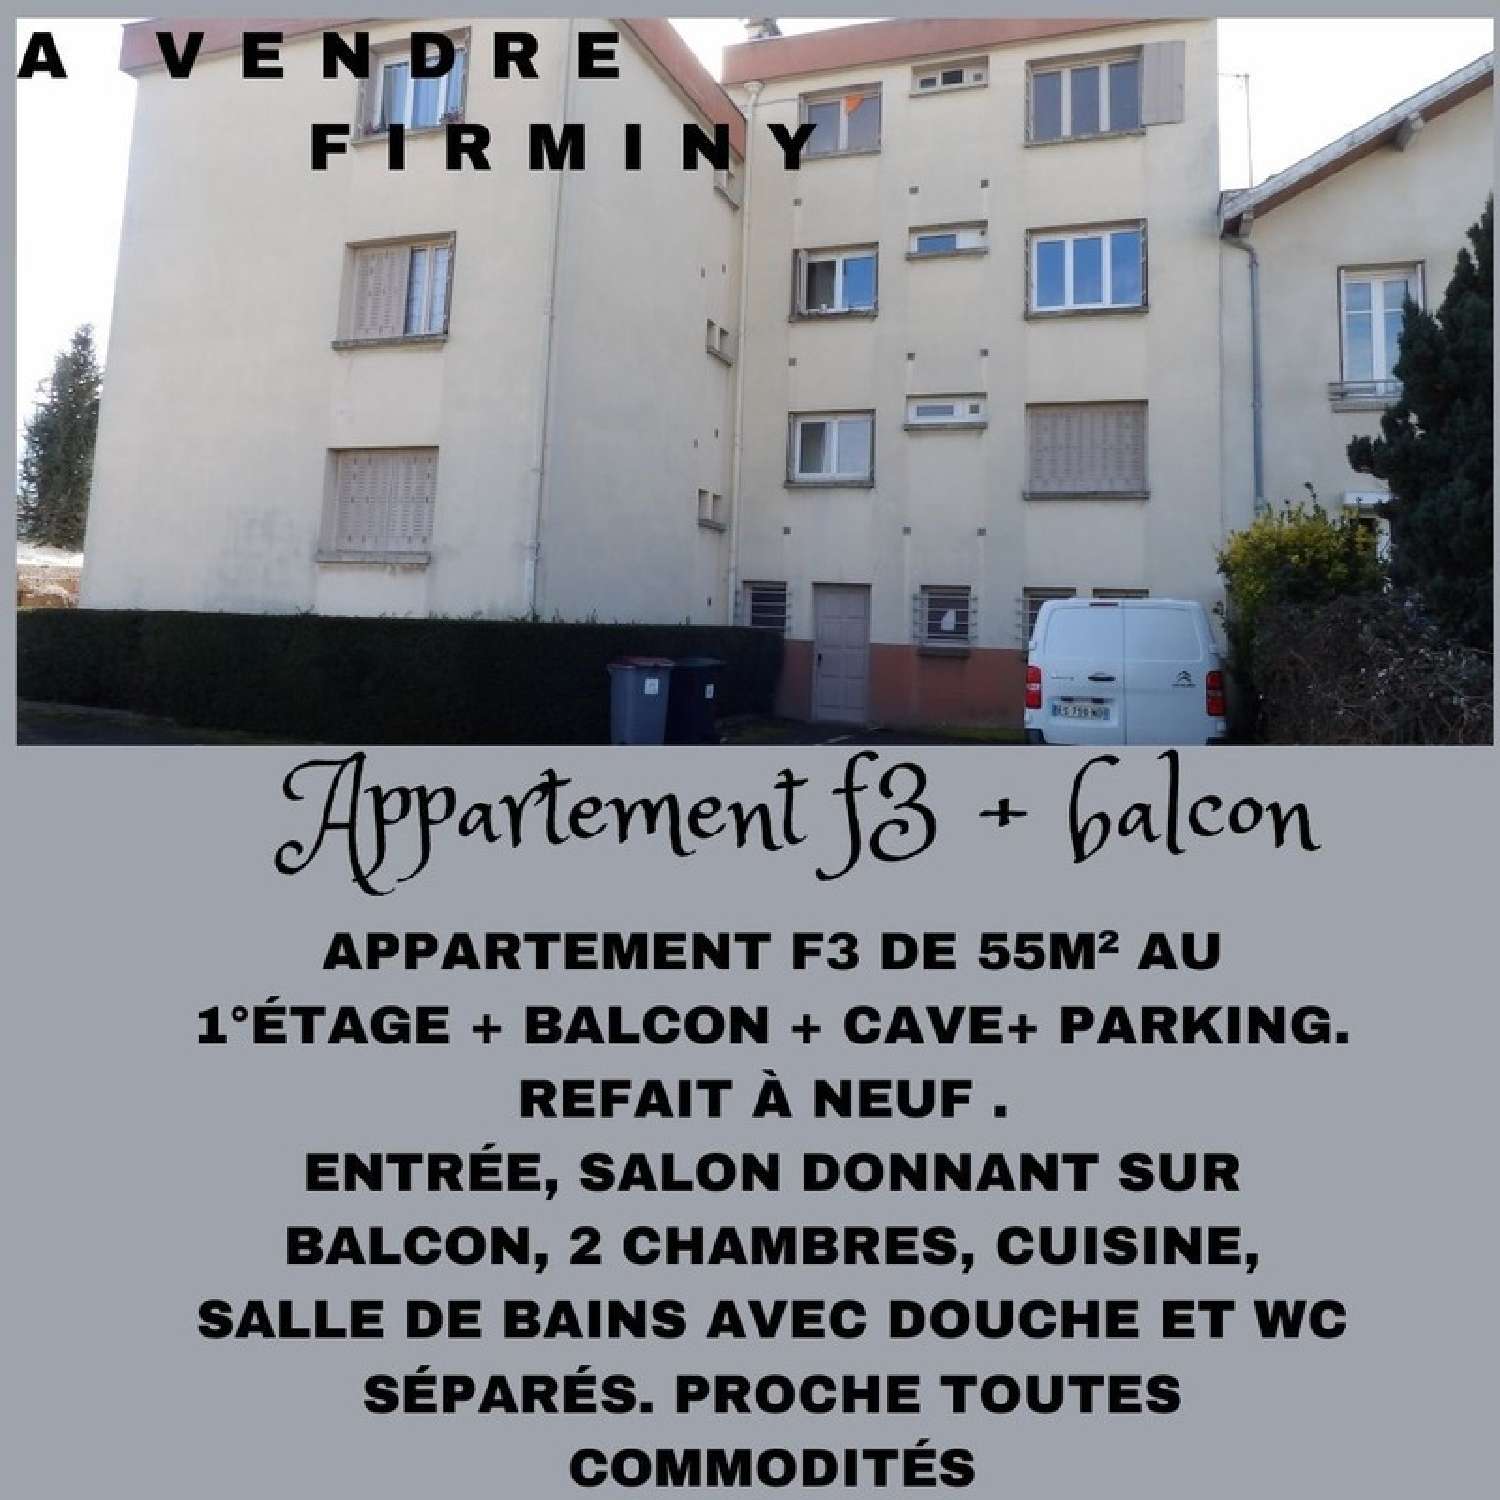  te koop appartement Firminy Loire 1